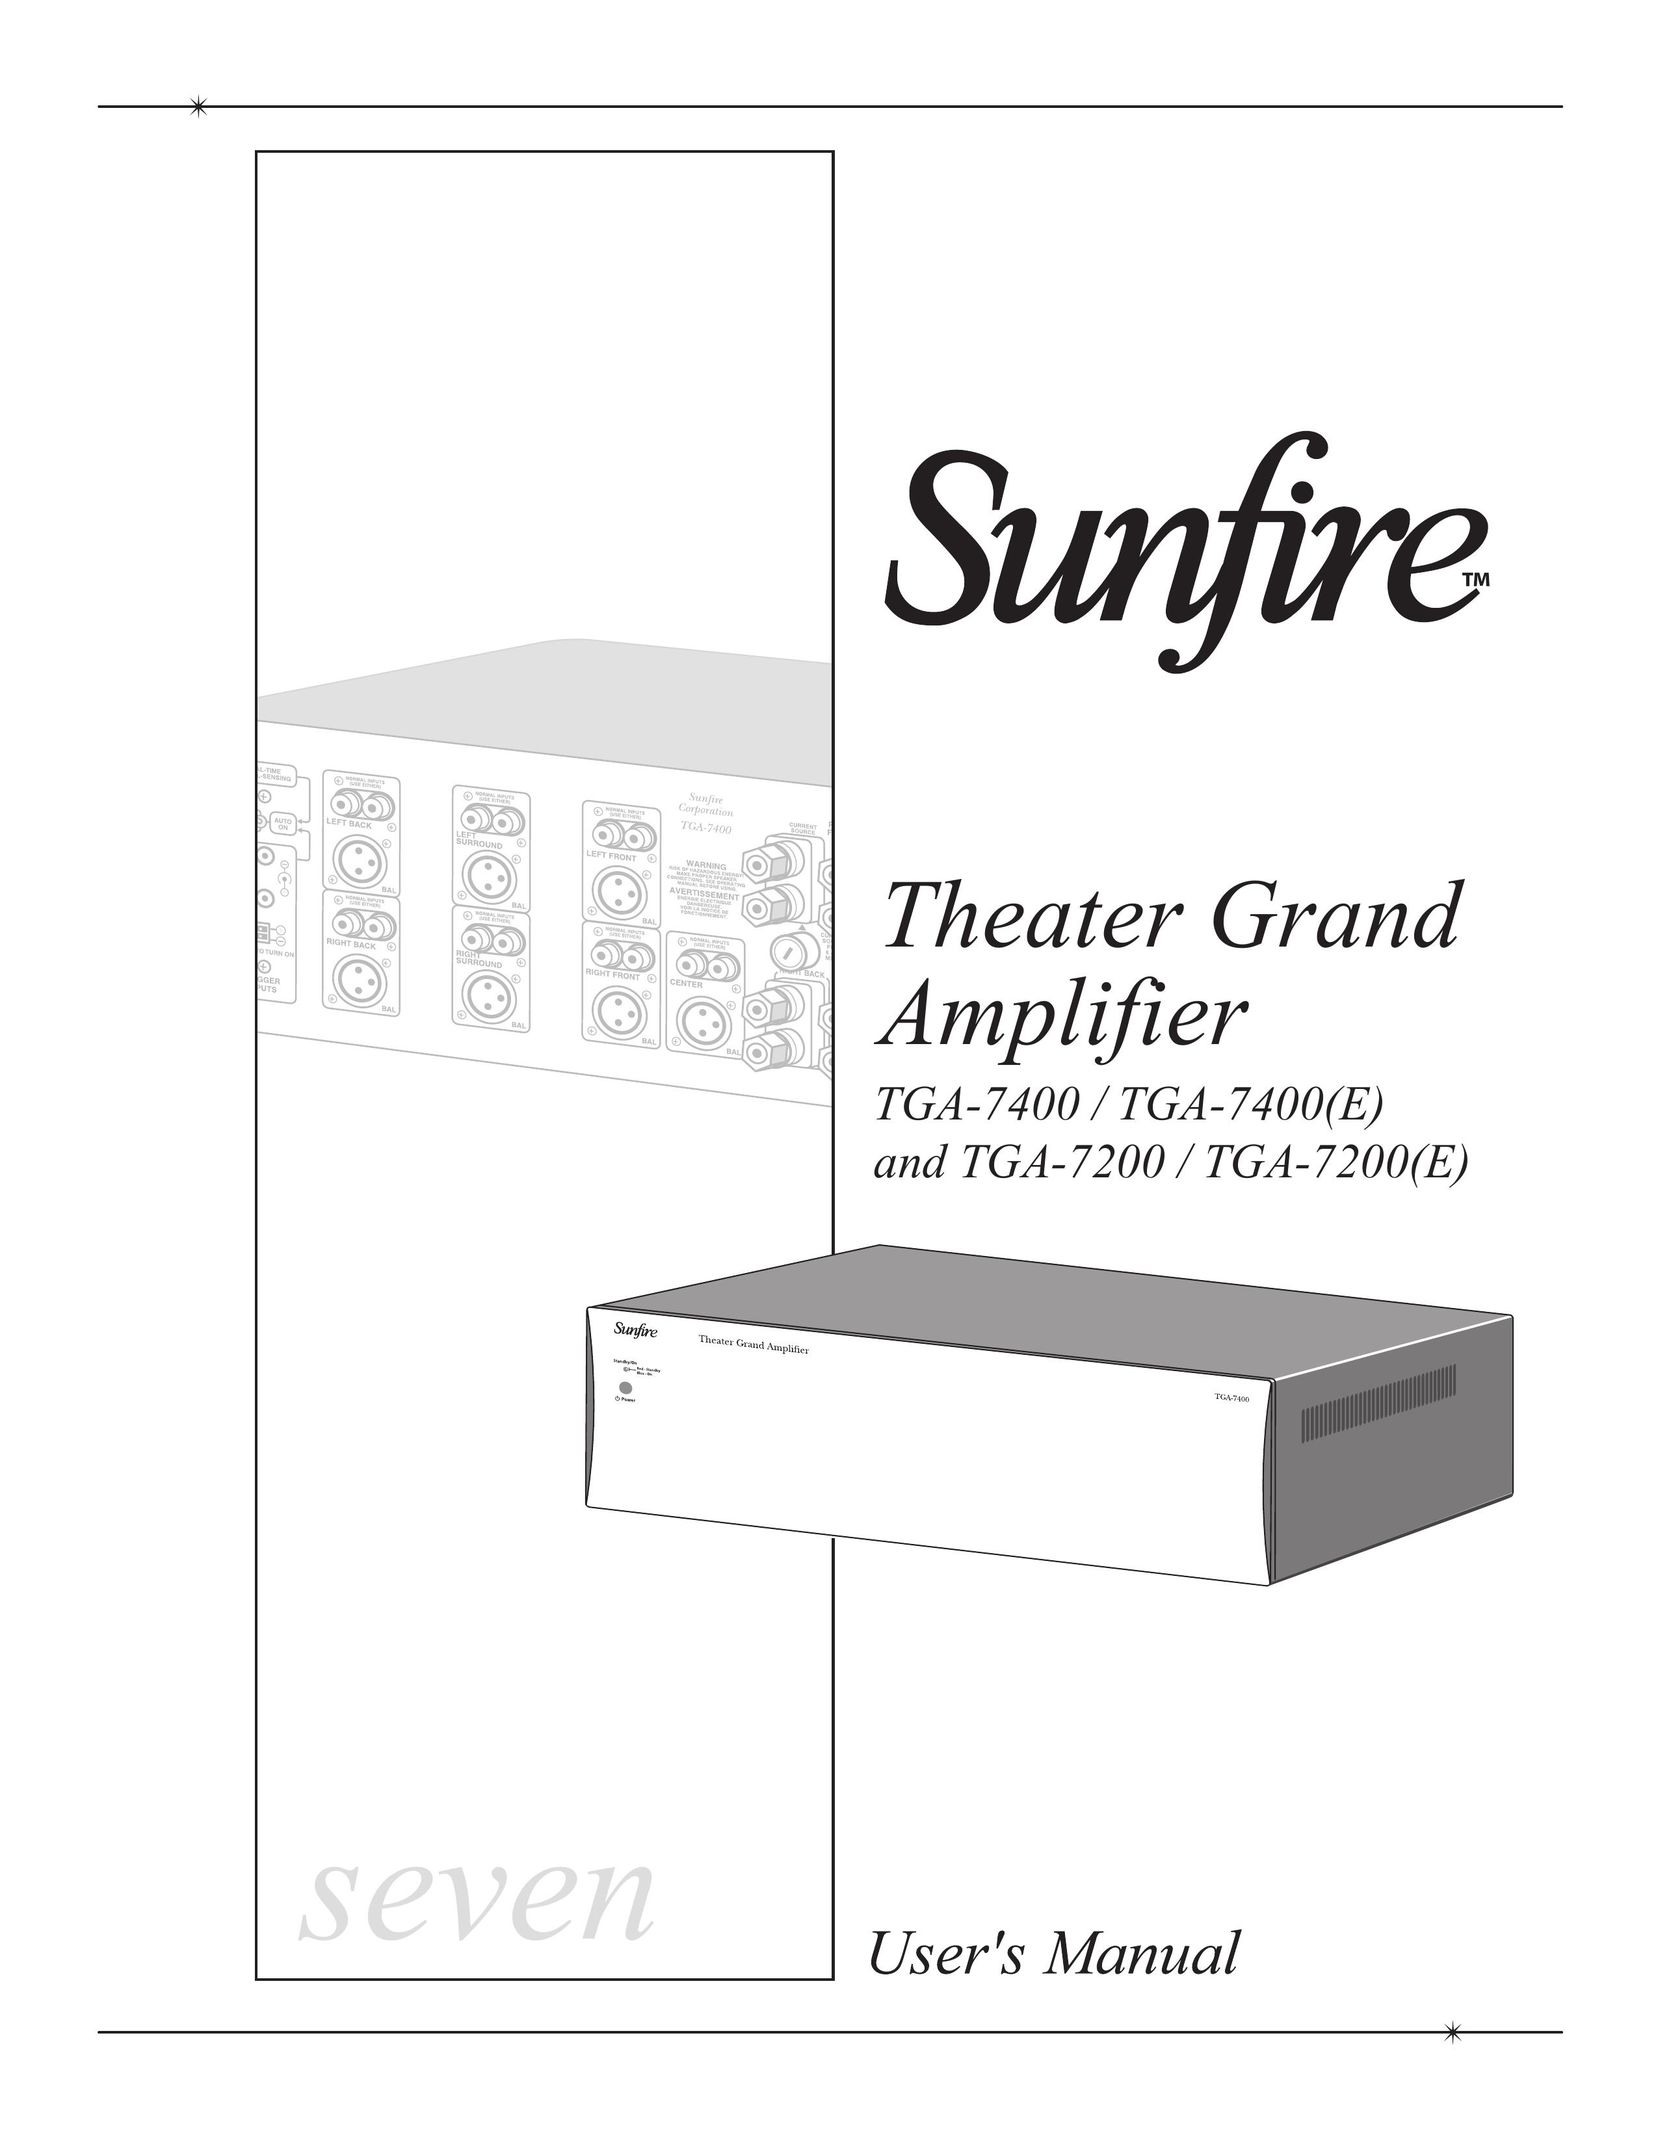 Sunfire TGA-7400(E) Stereo Amplifier User Manual